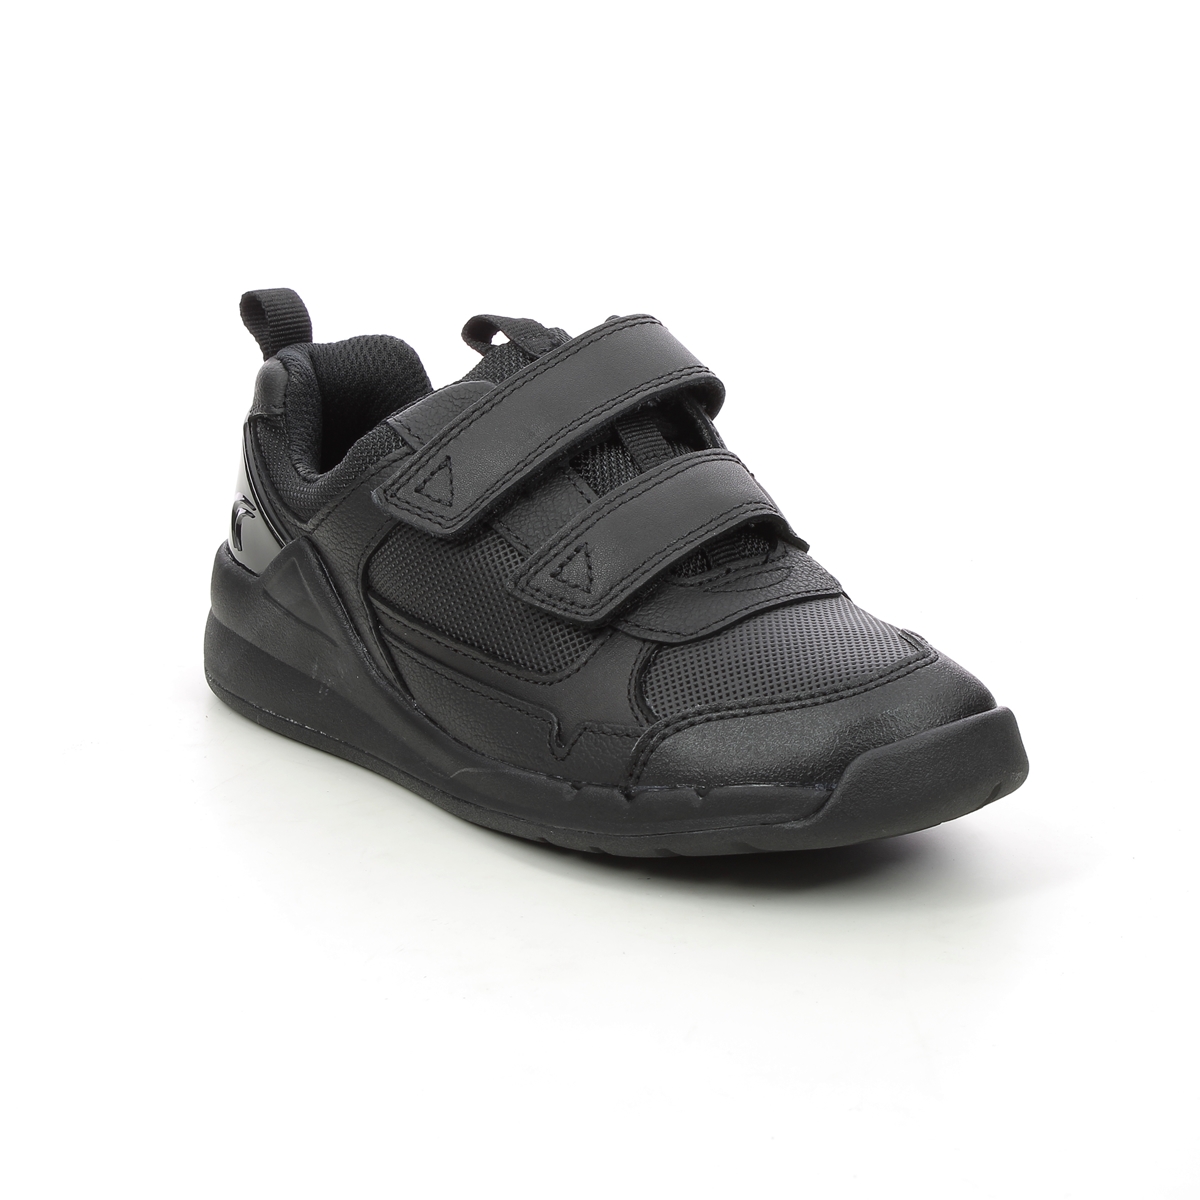 Clarks Orbit Sprint K Black Leather Kids Boys Shoes 534786F In Size 13 In Plain Black Leather F Width Fitting Regular Fit For kids